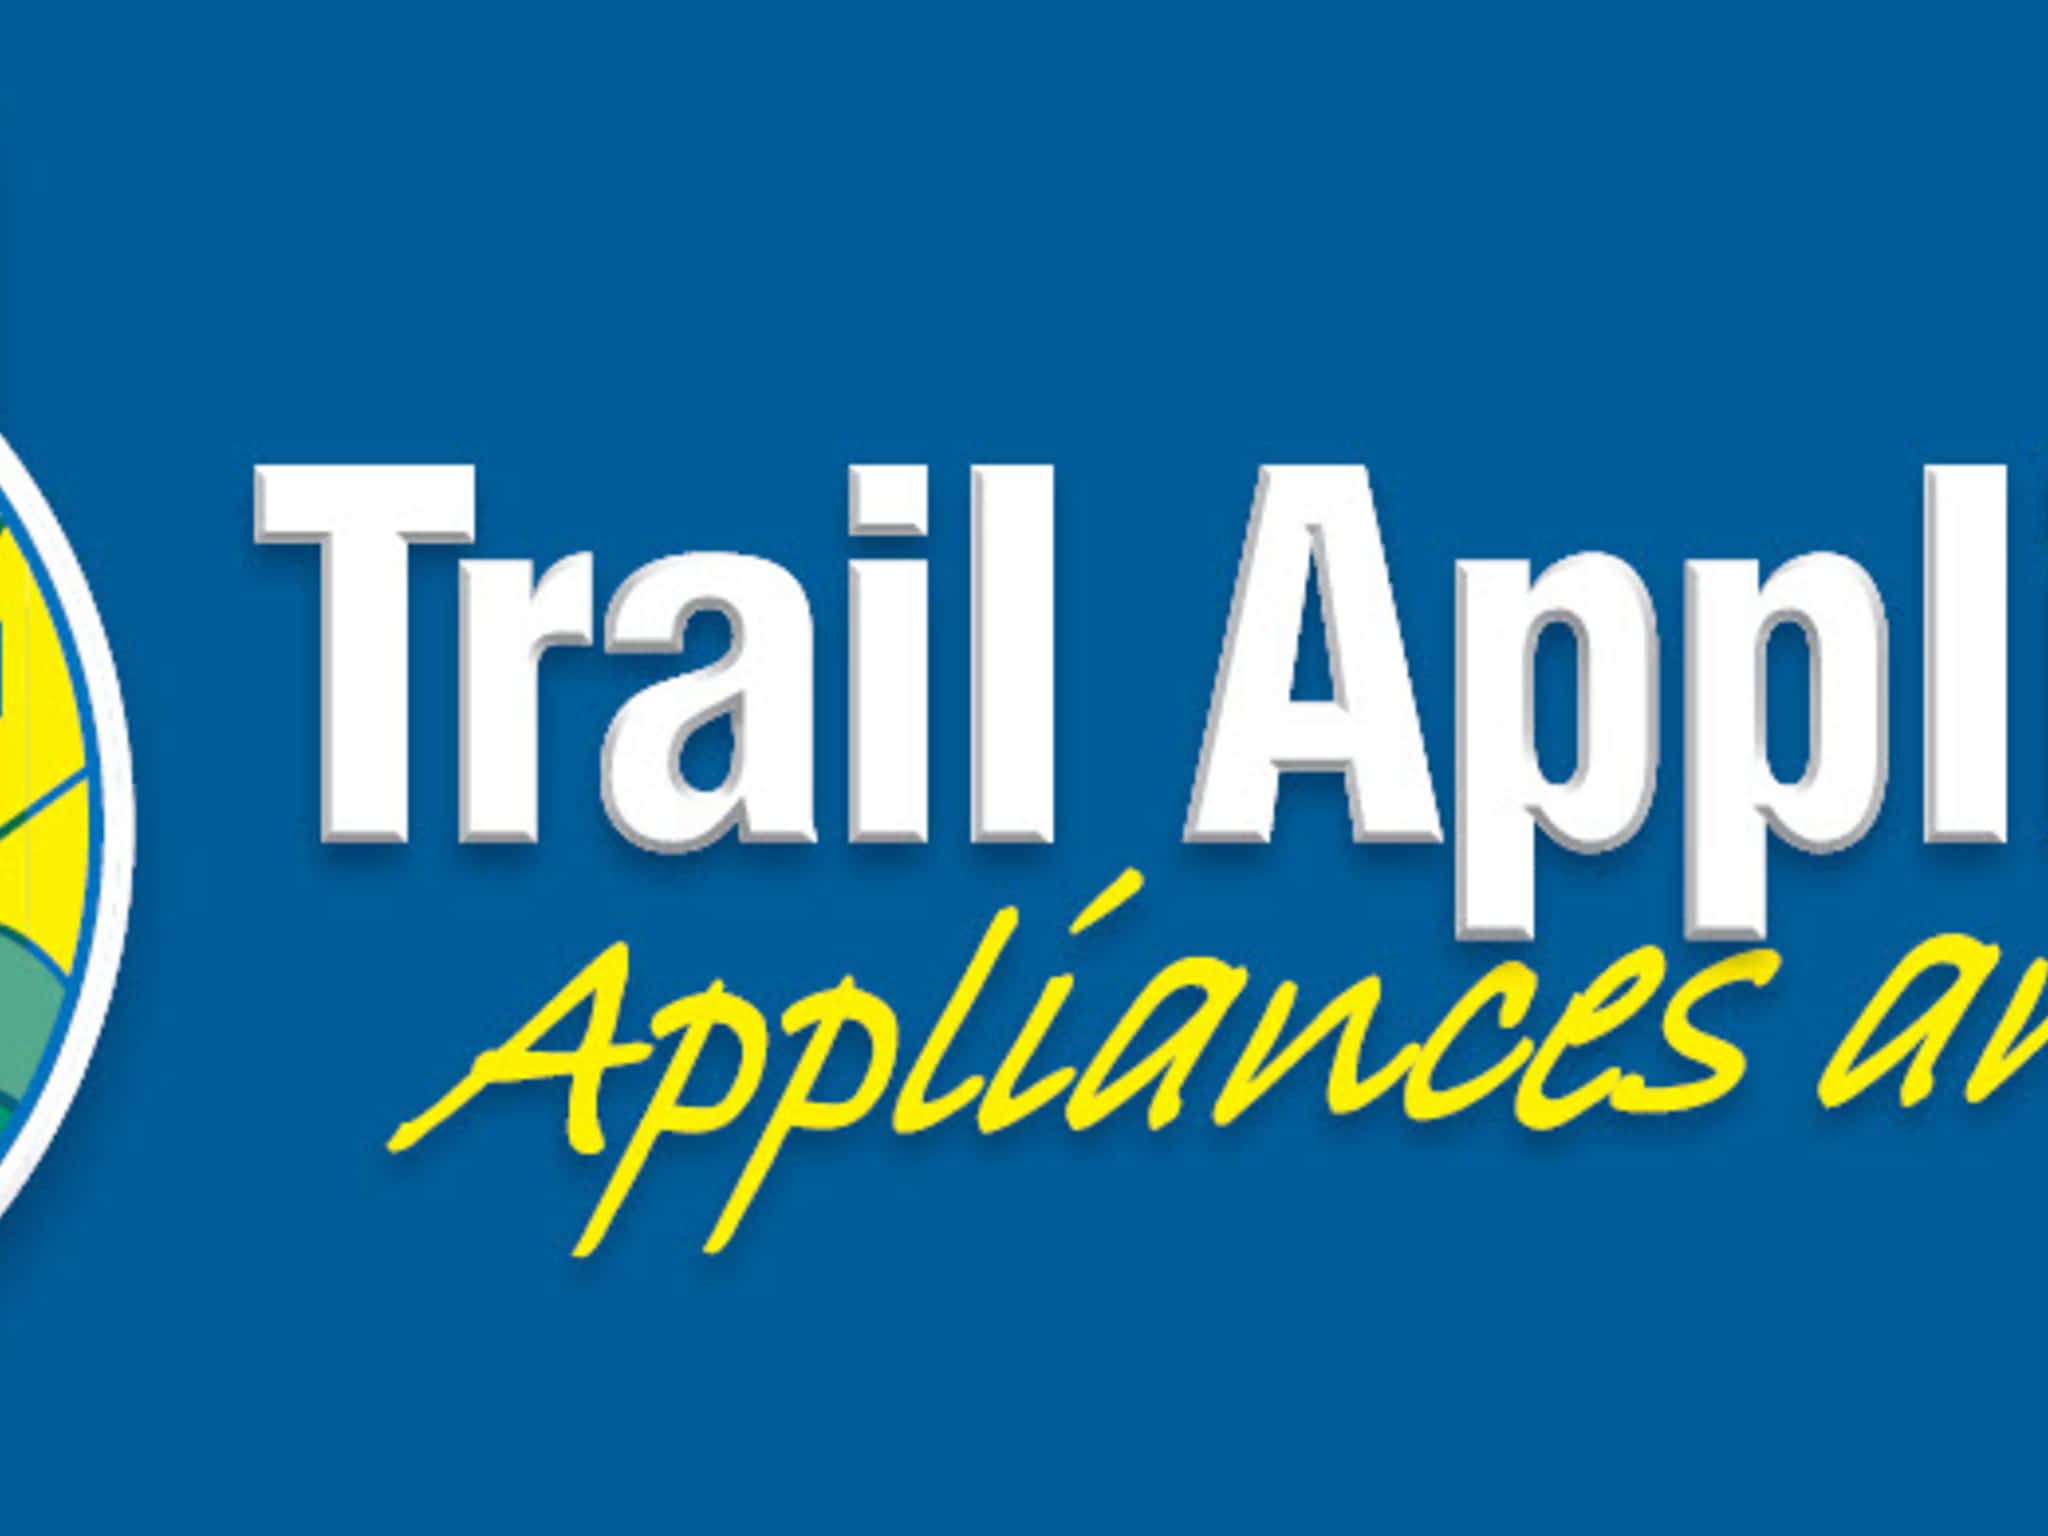 photo Trail Appliances